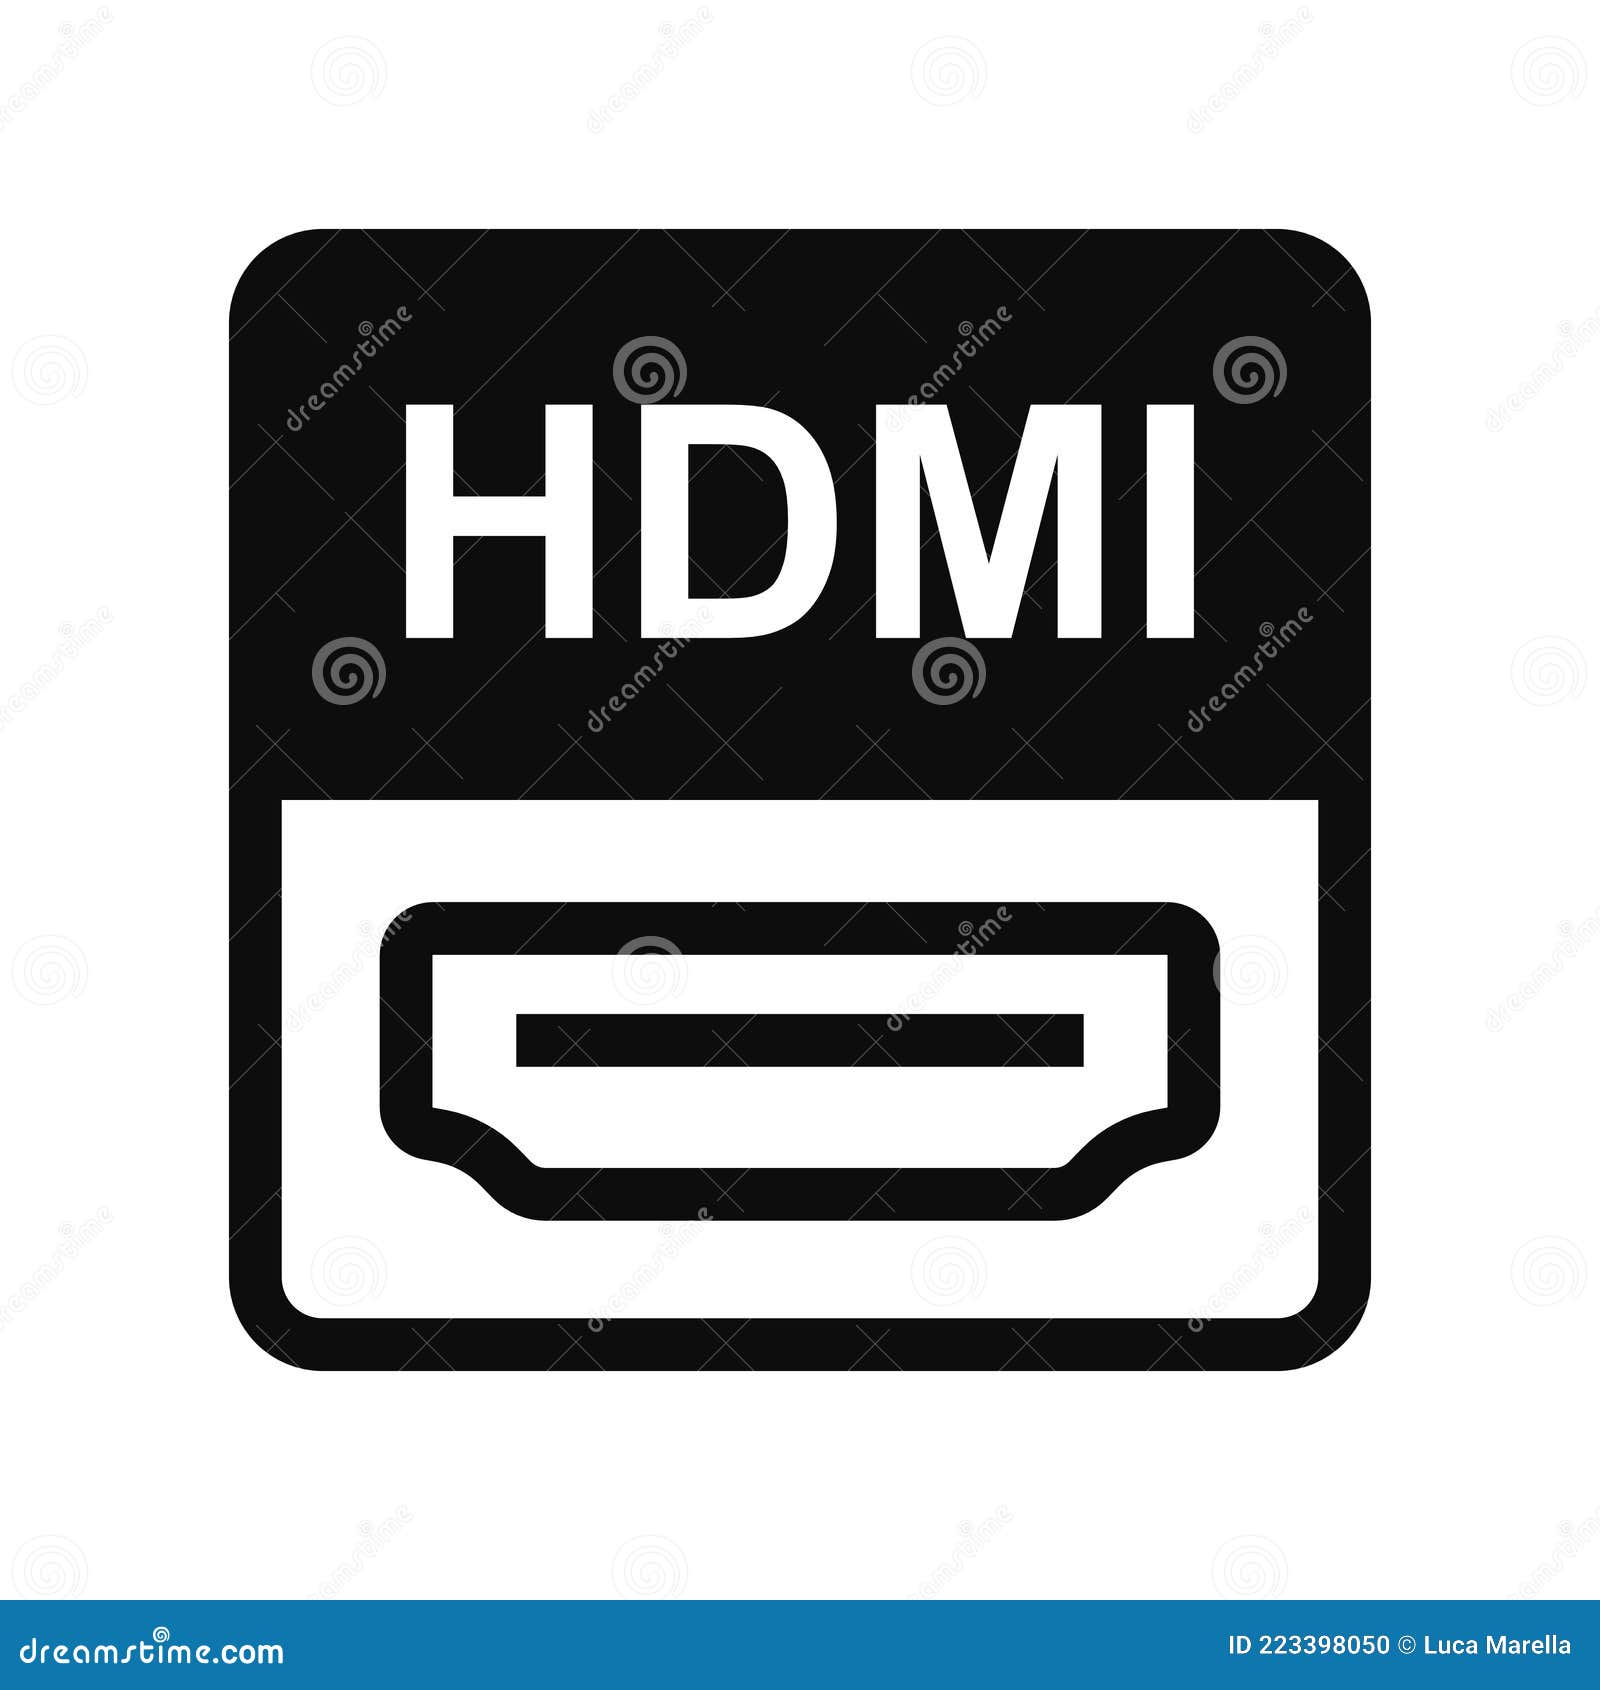 HDMI icon stock vector. Illustration of - 223398050